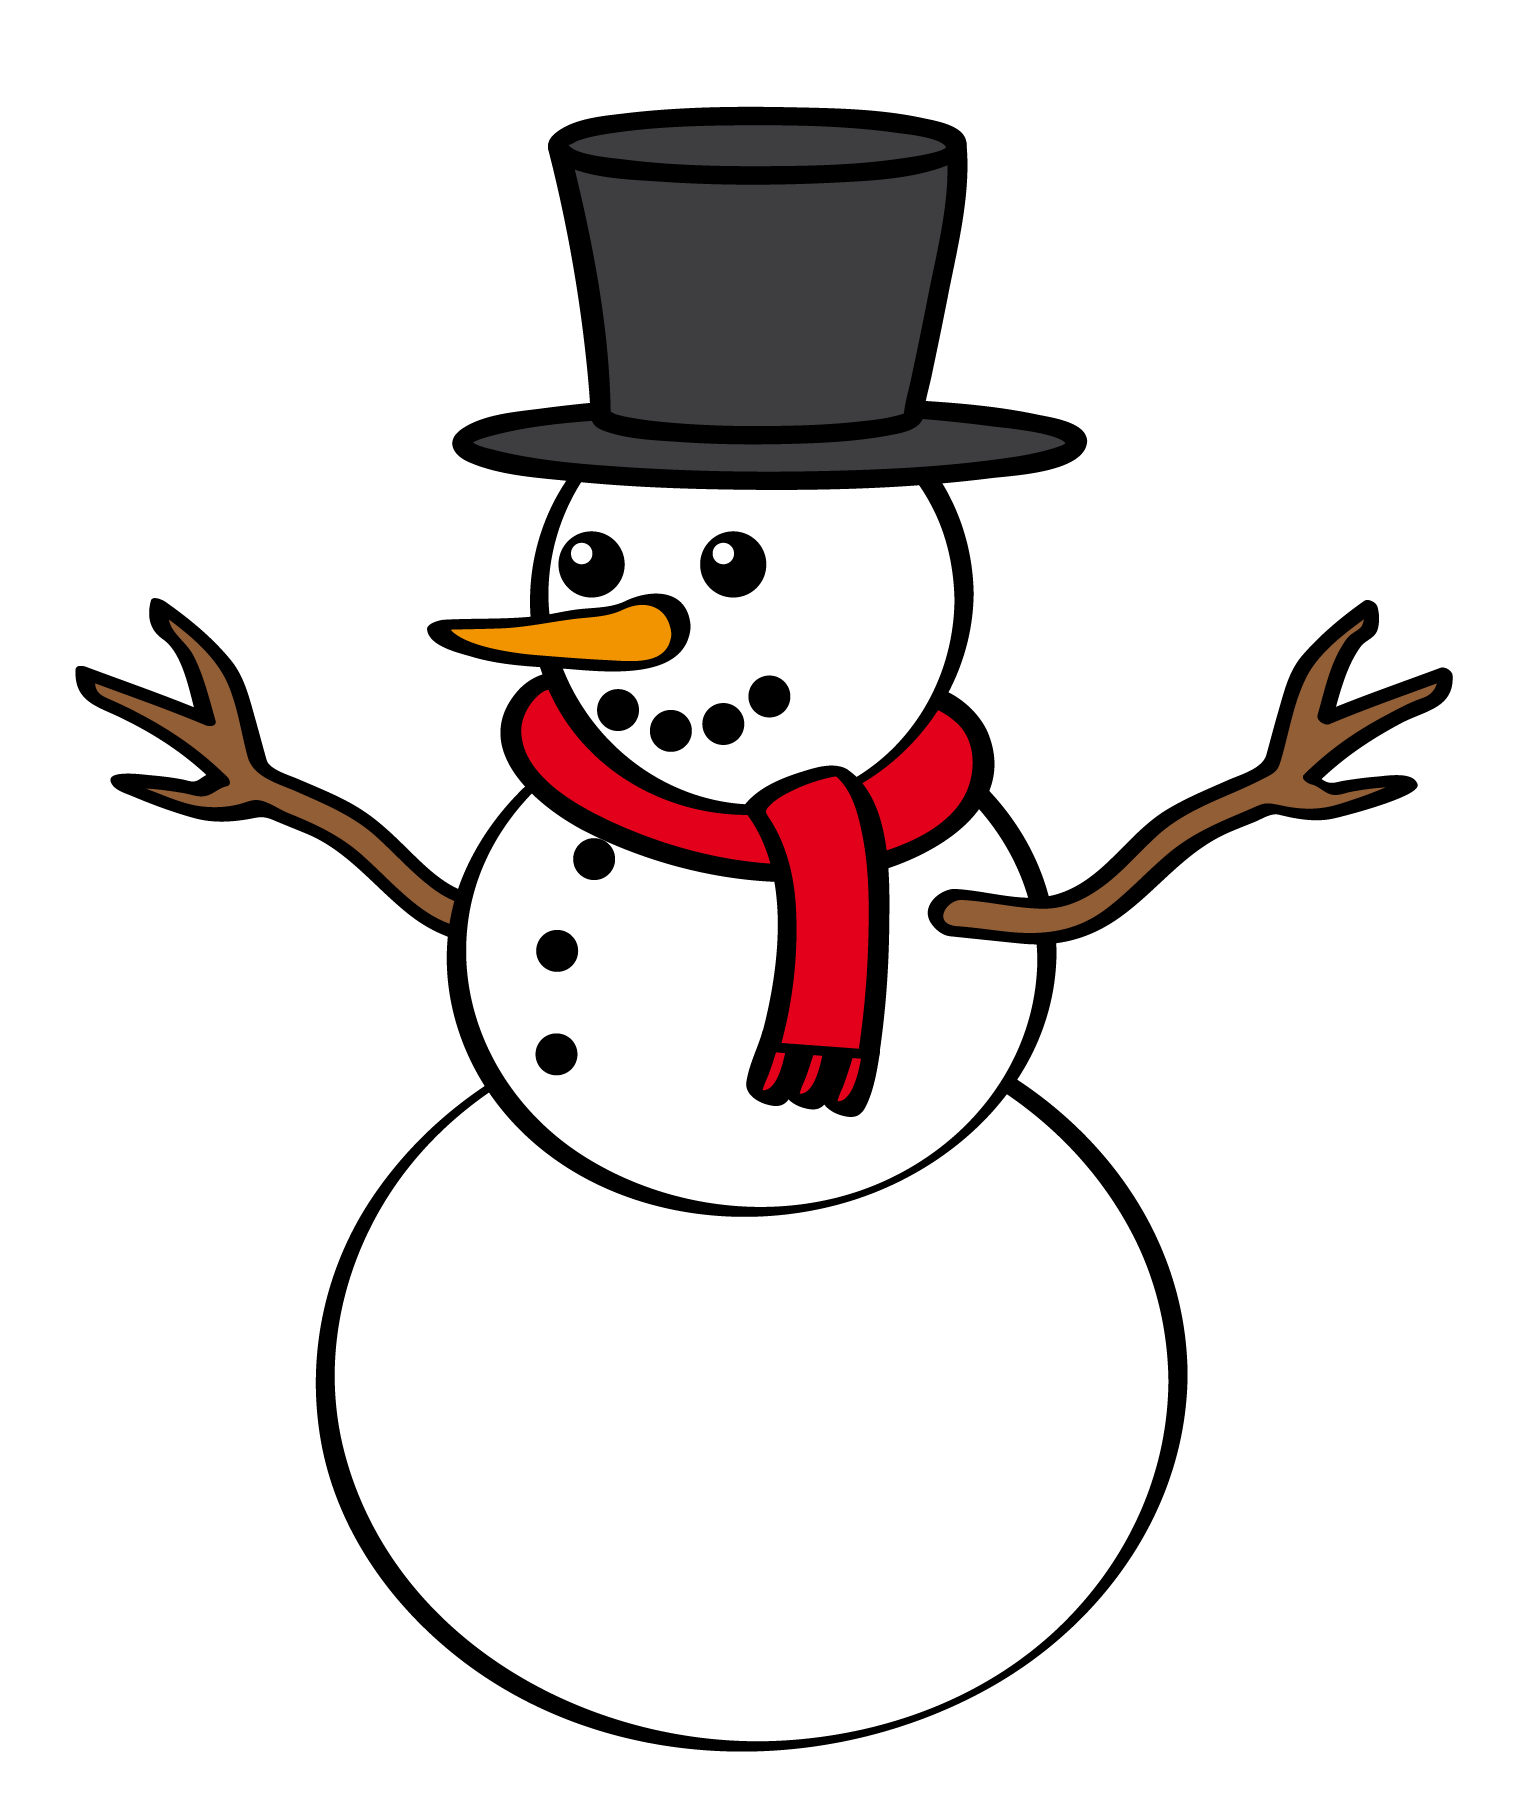 Melting snowman clipart | ClipartMonk - Free Clip Art Images